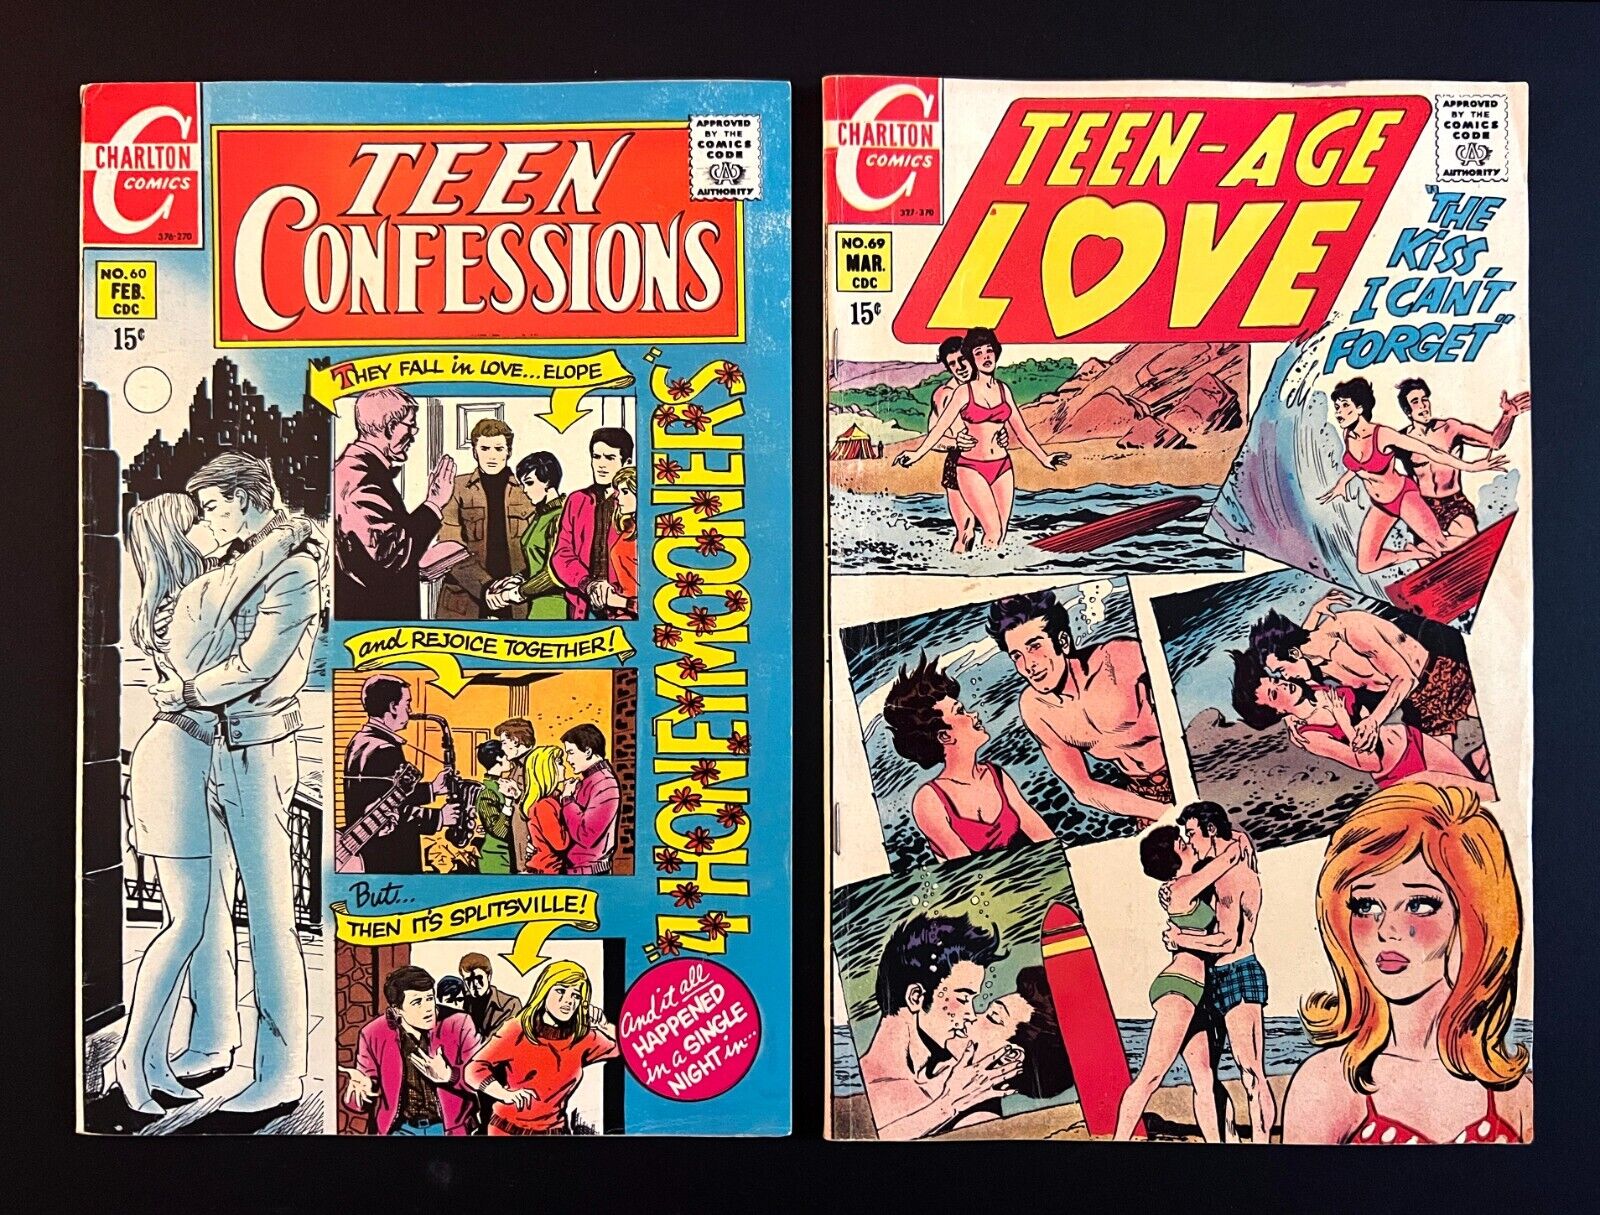 TEEN CONFESSIONS #60 + TEEN-AGE LOVE #69 Romance Comic Lot Charlton Comics 1970